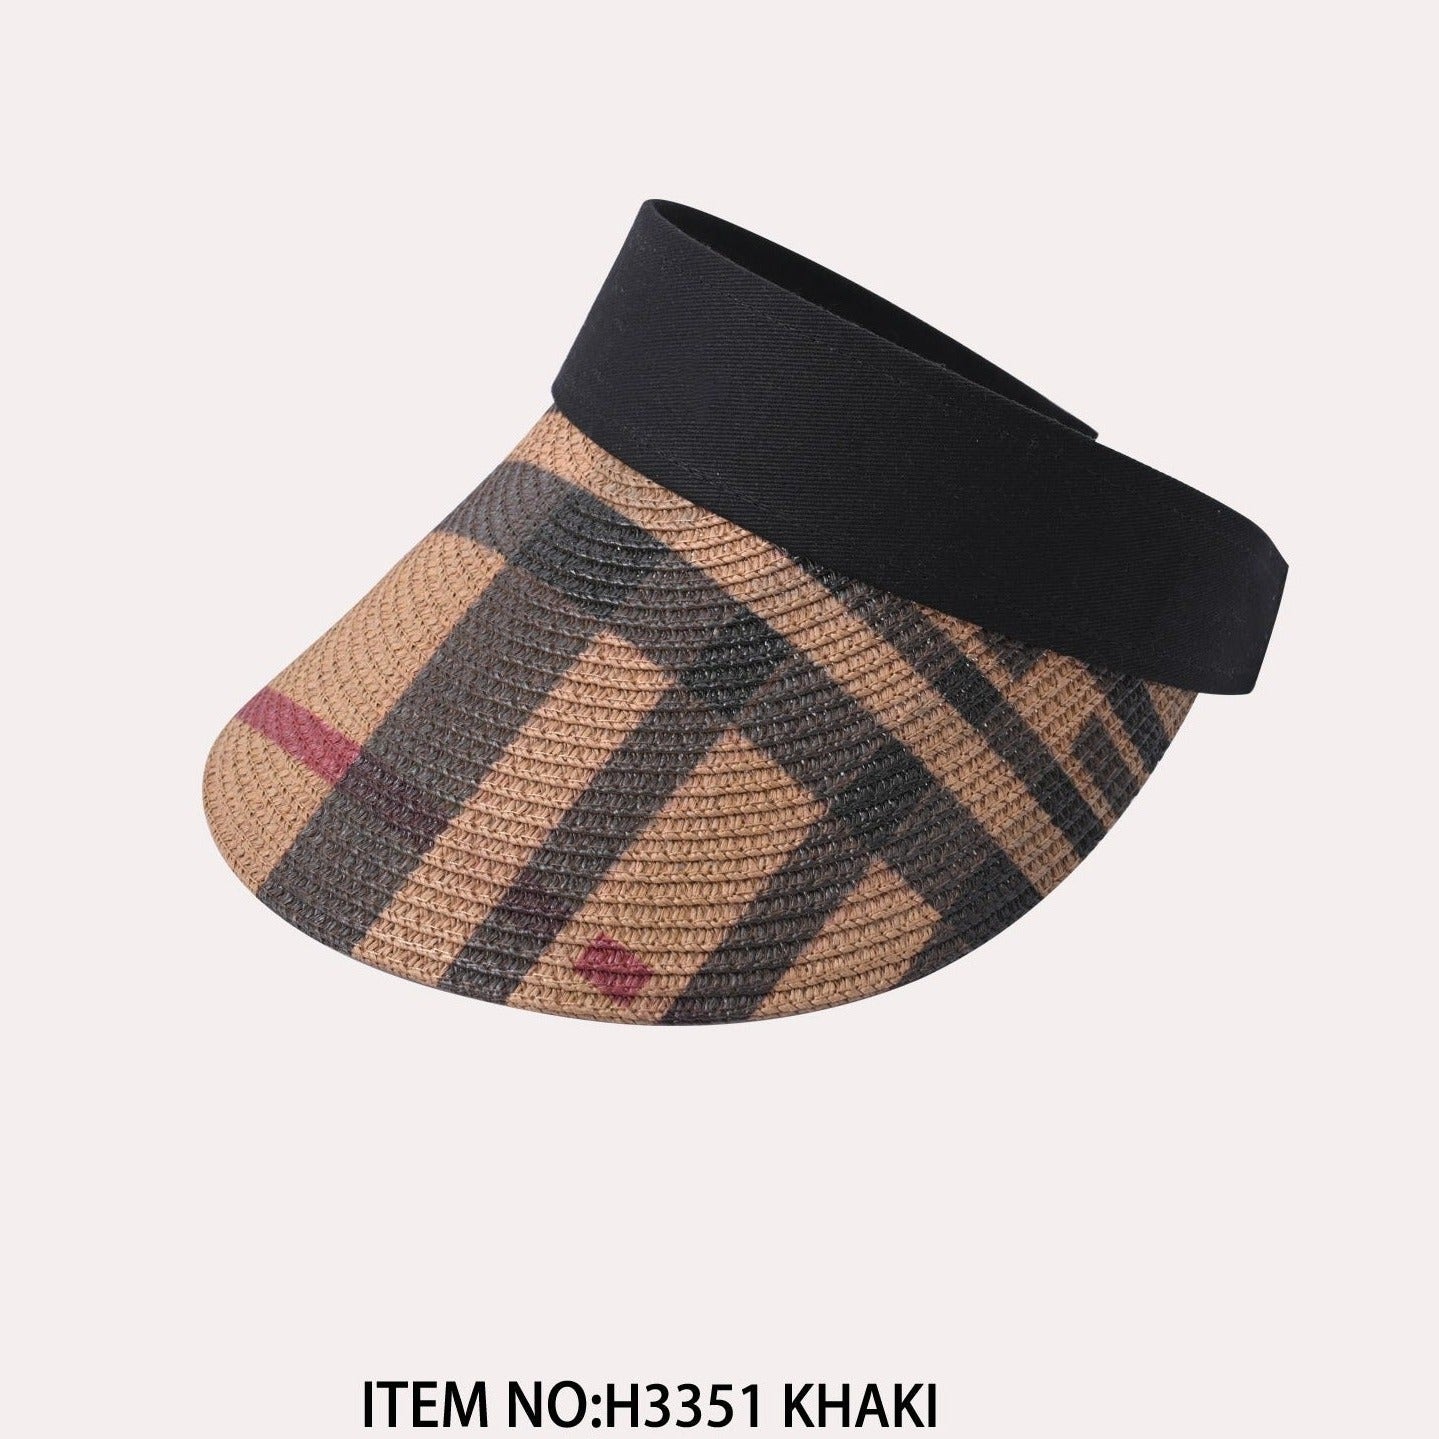 Fashion Visor Hat W/ Design #H3351 Khaki - (PC)